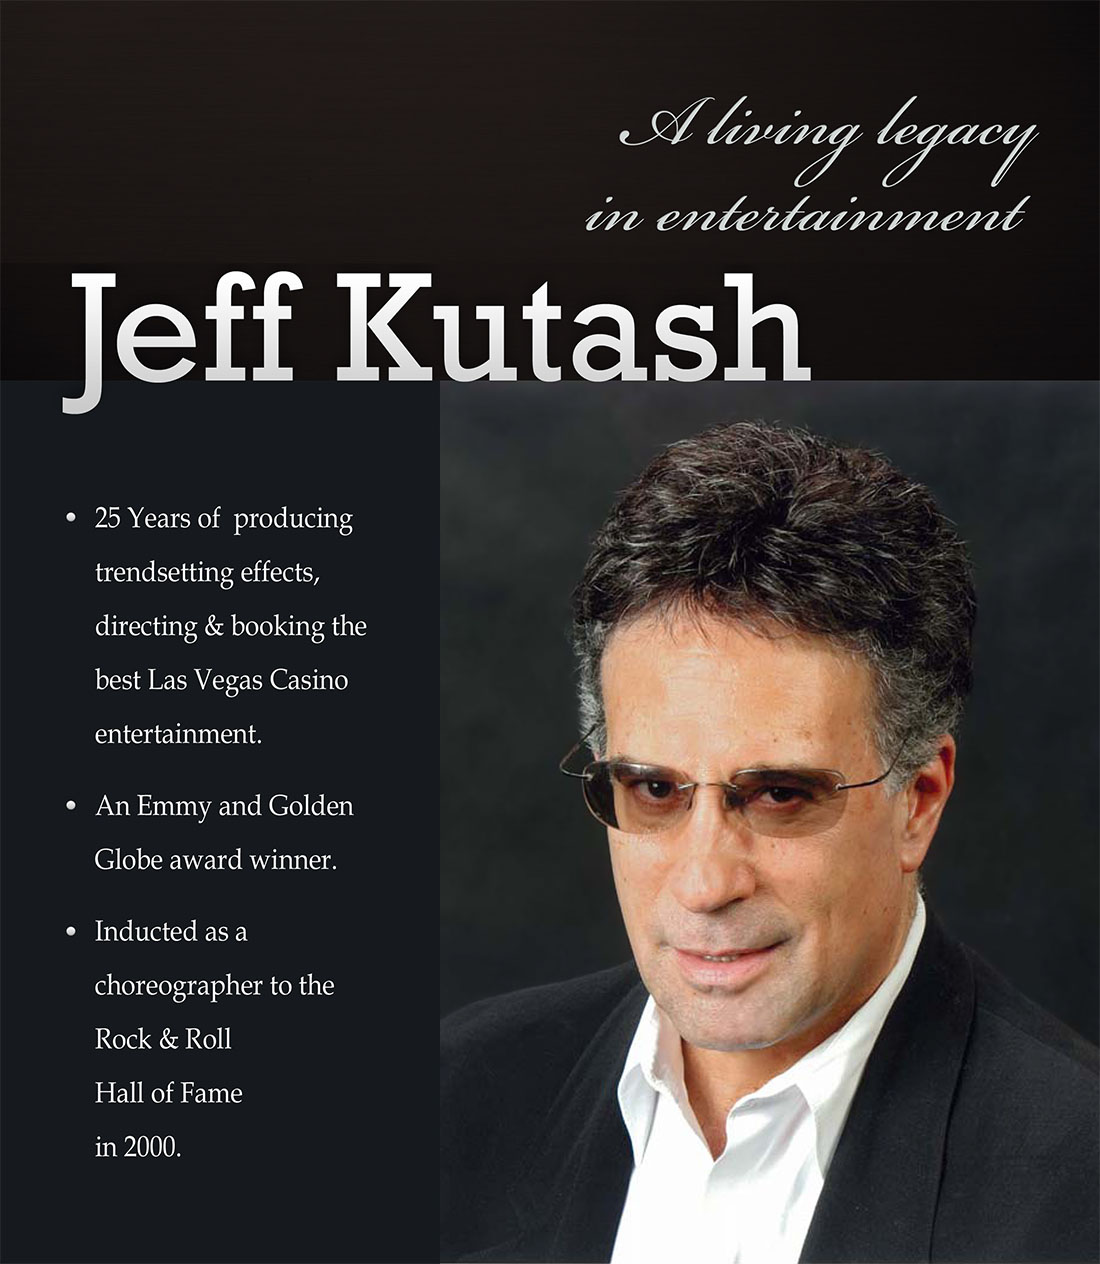 Jeff Kutash a Living Legacy in Entertainment